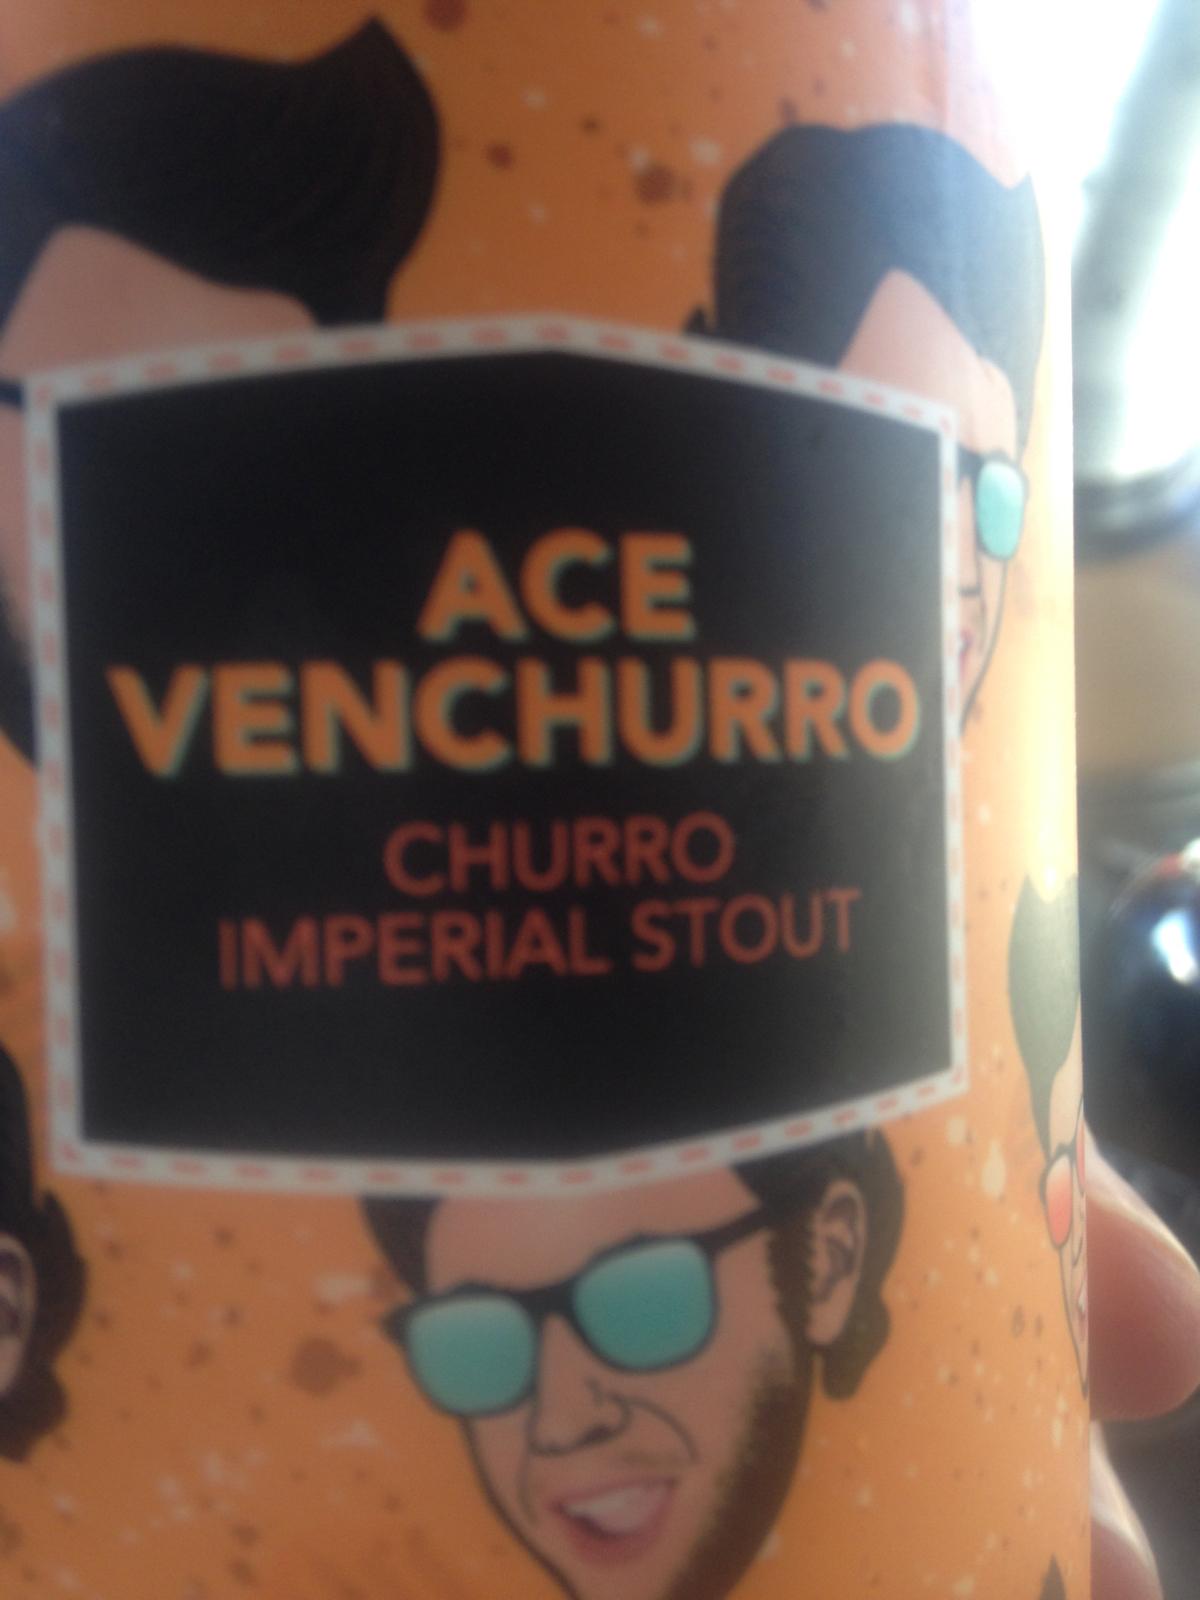 Ace Venchurro